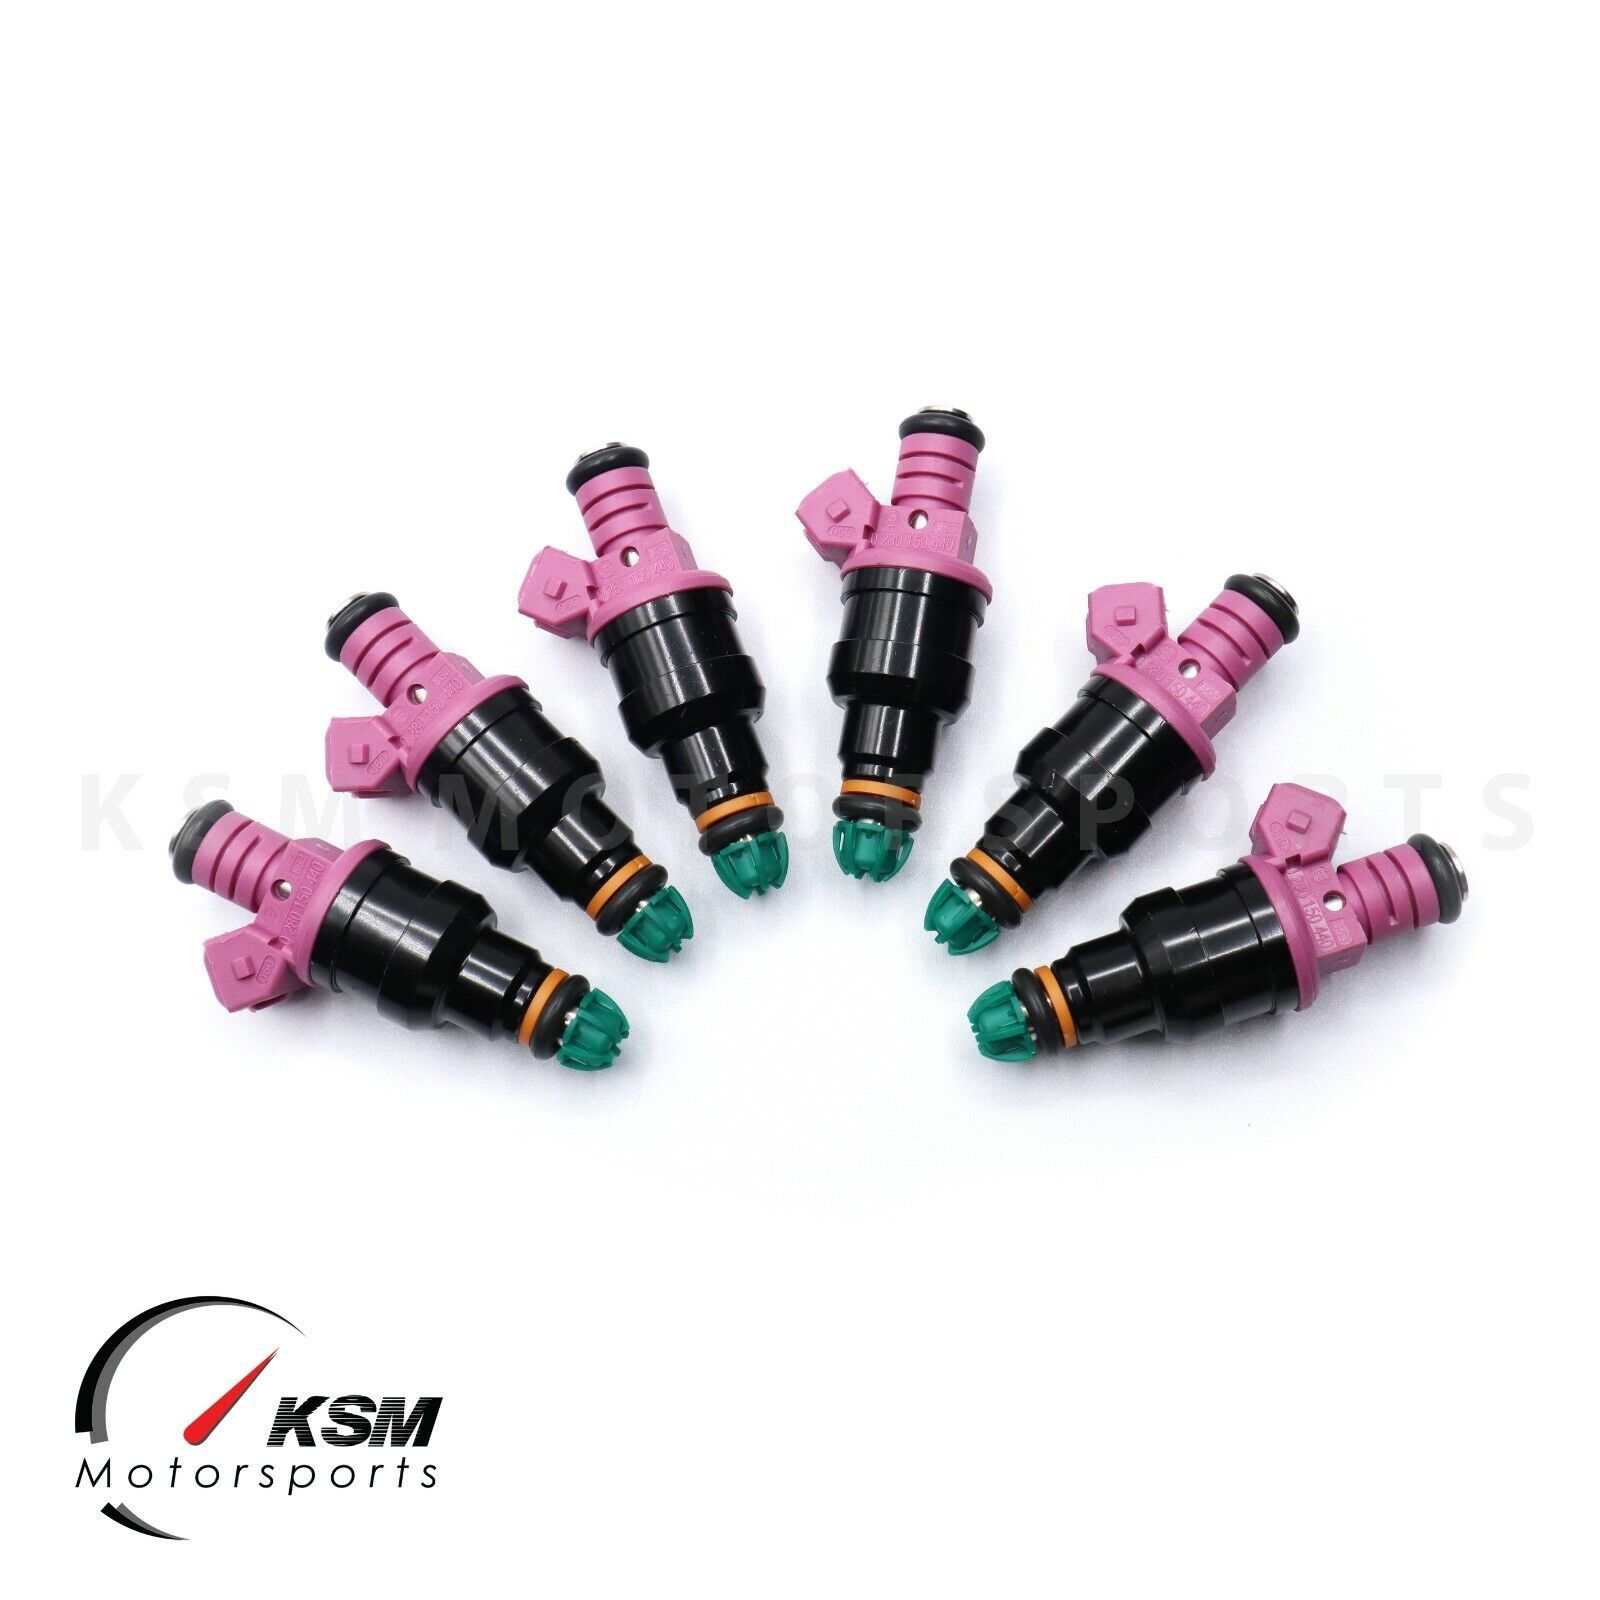 6 x Fuel Injectors fit OEM Bosch 0280150440 fit 96-00 BMW 2.8L 3.2L I6 M52 S52 - $166.89